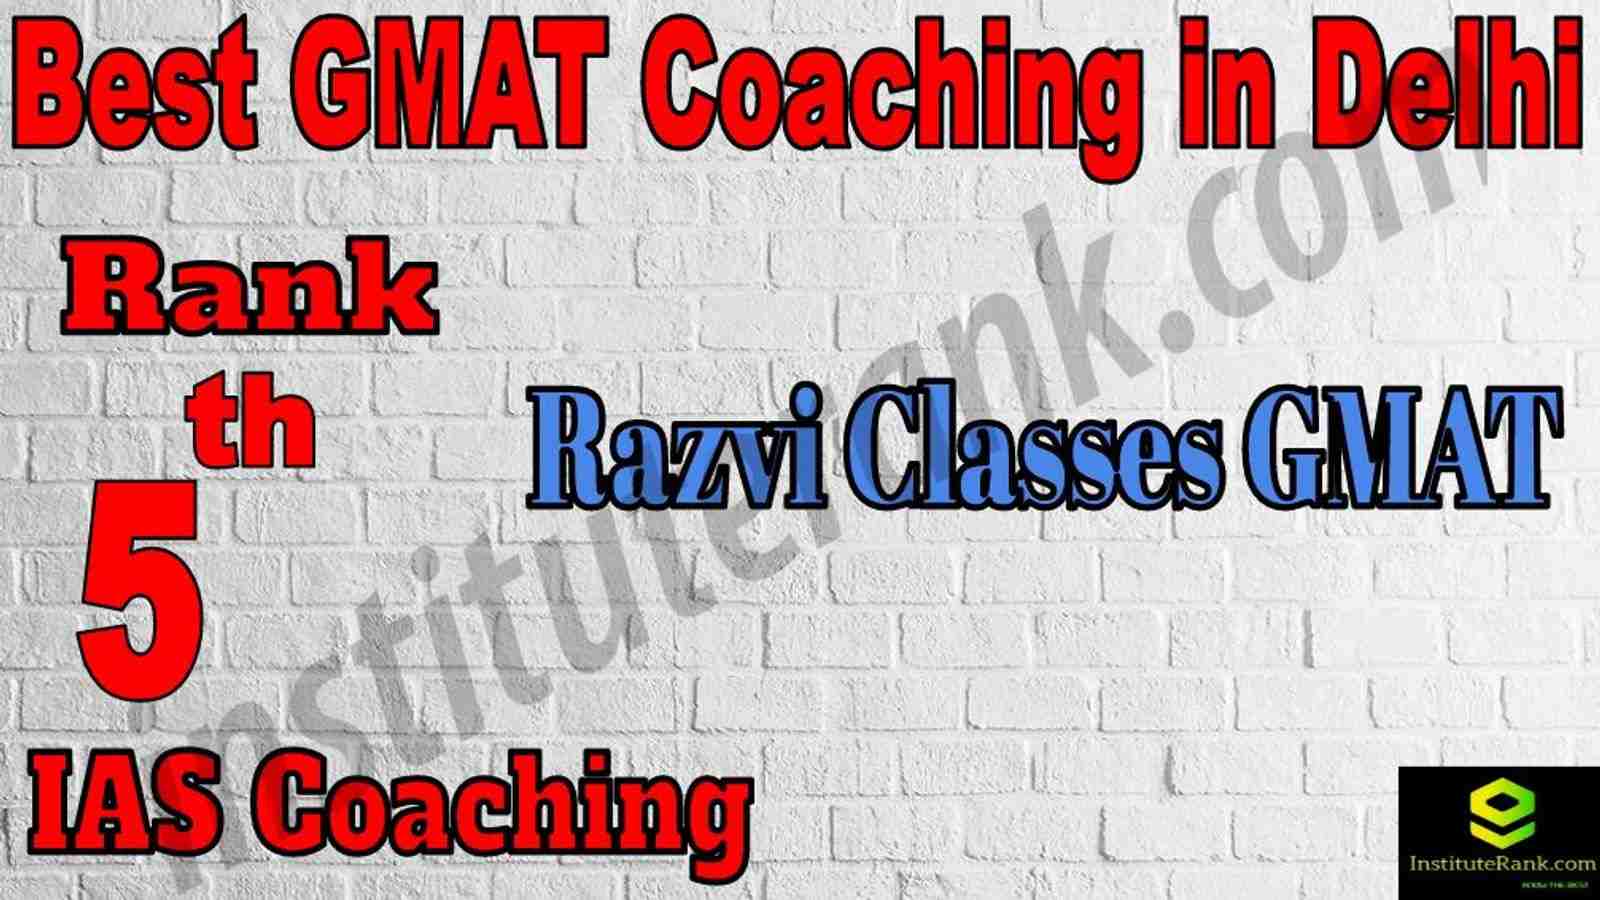 5th Best GMAT Coaching in Delhi